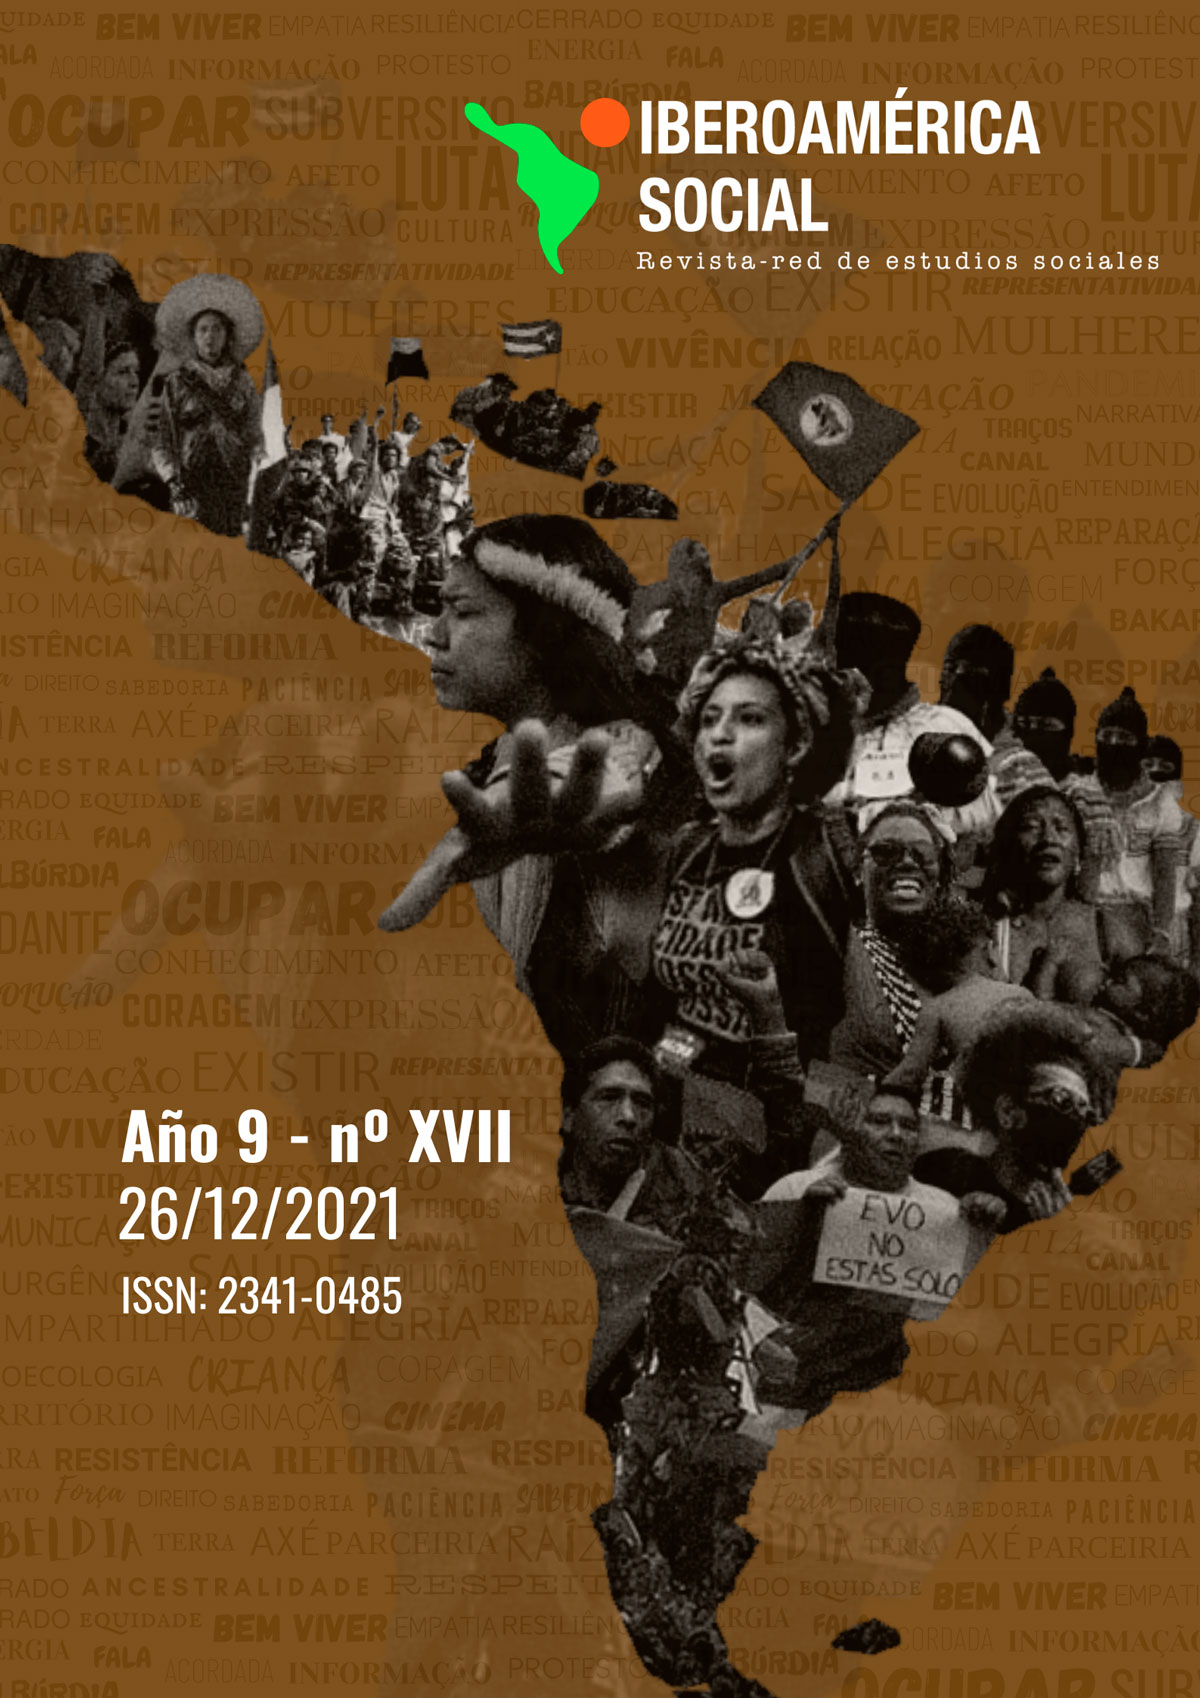 Iberoamérica Social: Revista-red de estudios sociales, Año 9, Número XVII